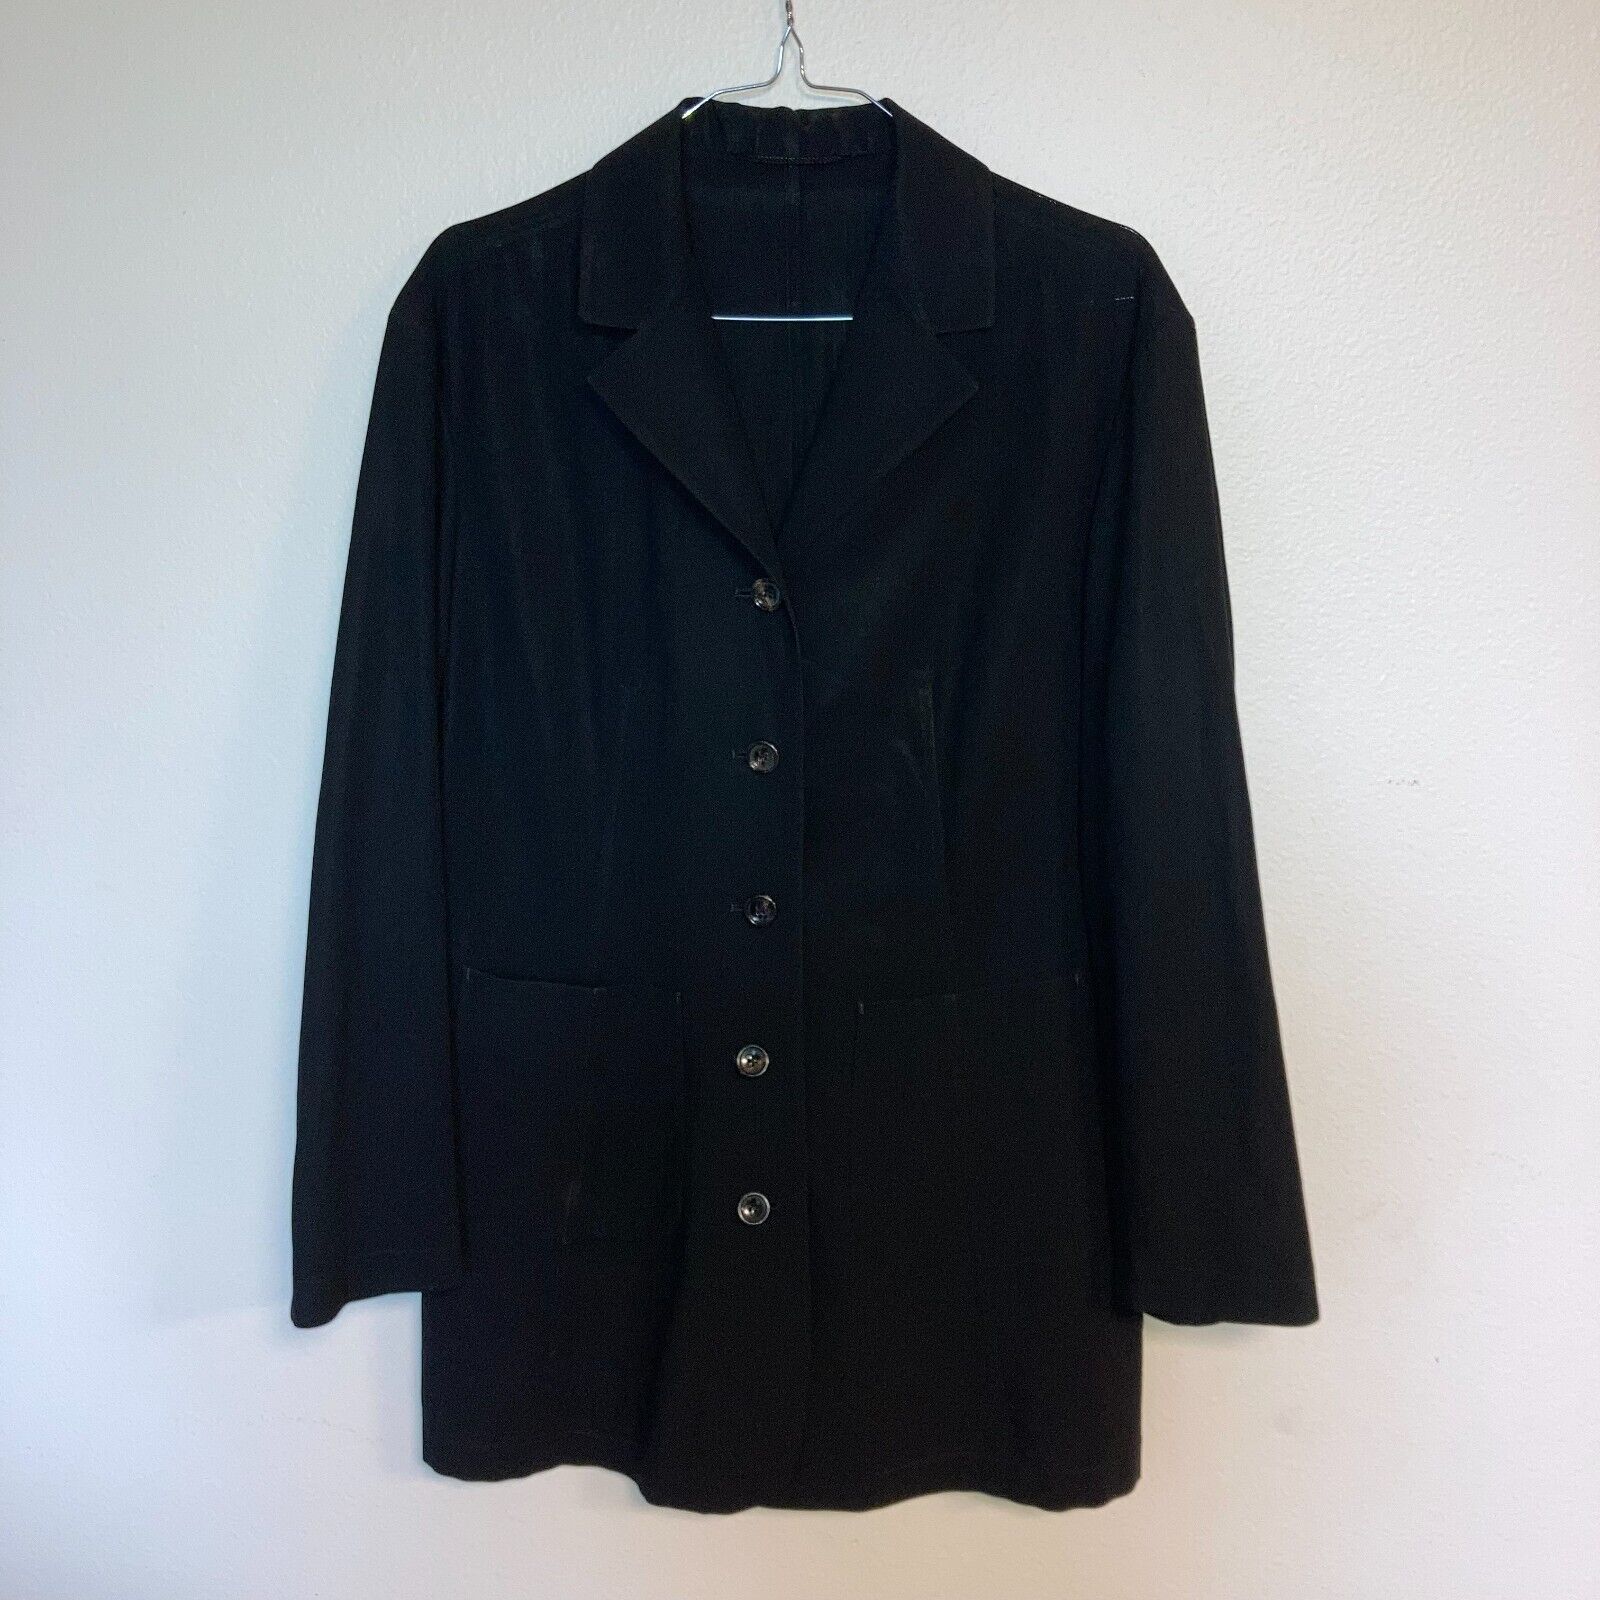 Jil Sander Lightweight Wool Blazer Jacket Black Size 38 6 Medium Made in Germany